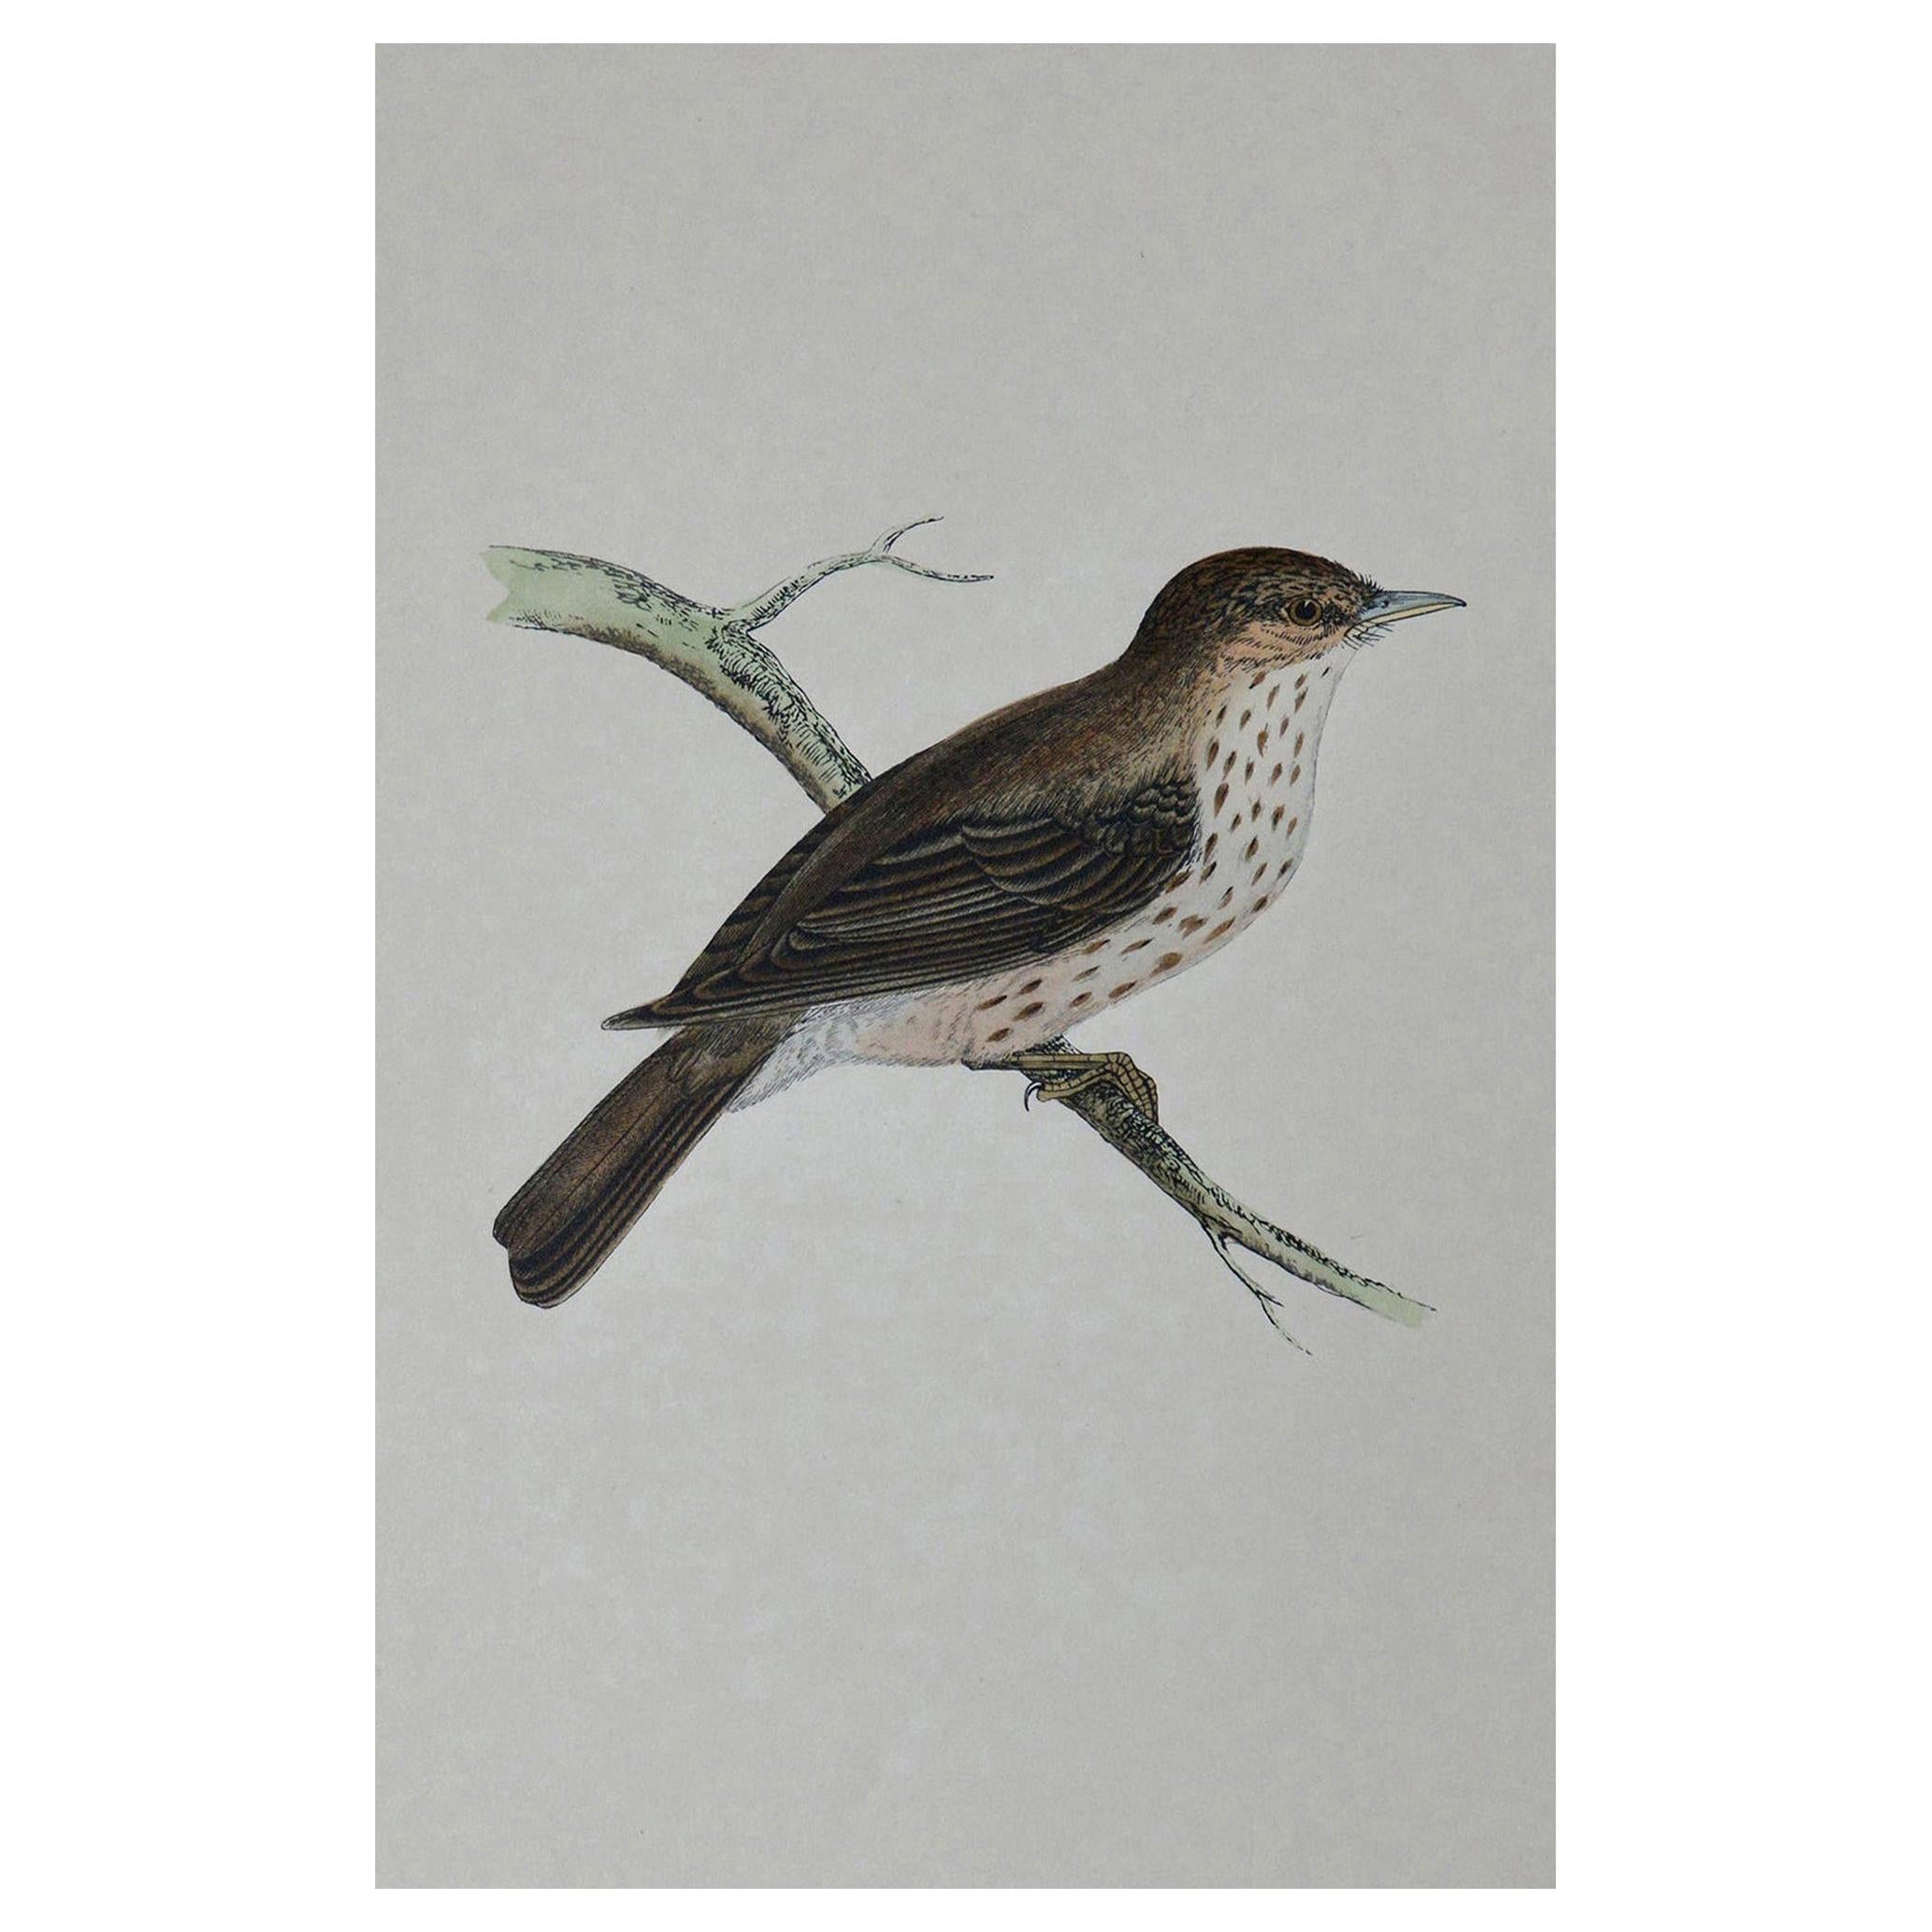 Original Antique Bird Print, the Spotted Flycatcher, circa 1850